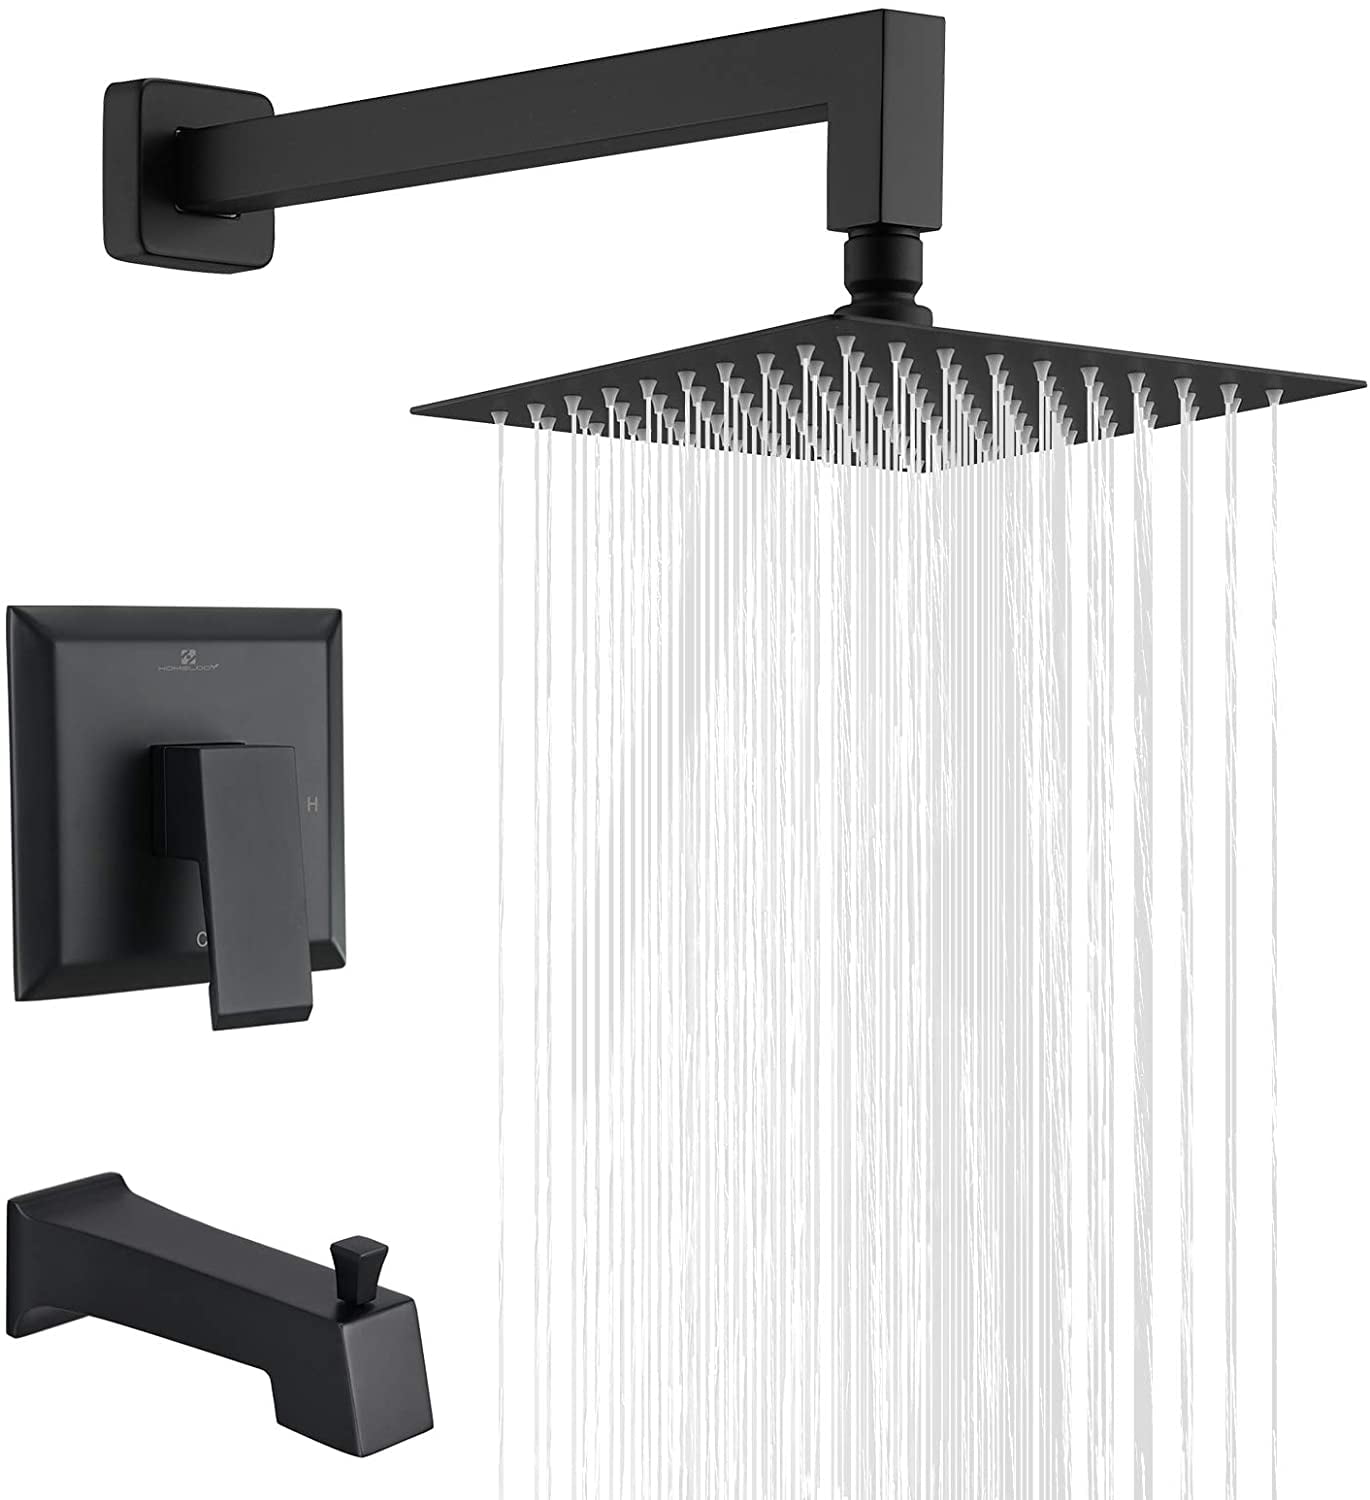 8"Wall Mount Black Oil Bathroom Rainfall Mixer Shower Faucet Head+Hand Spray Set